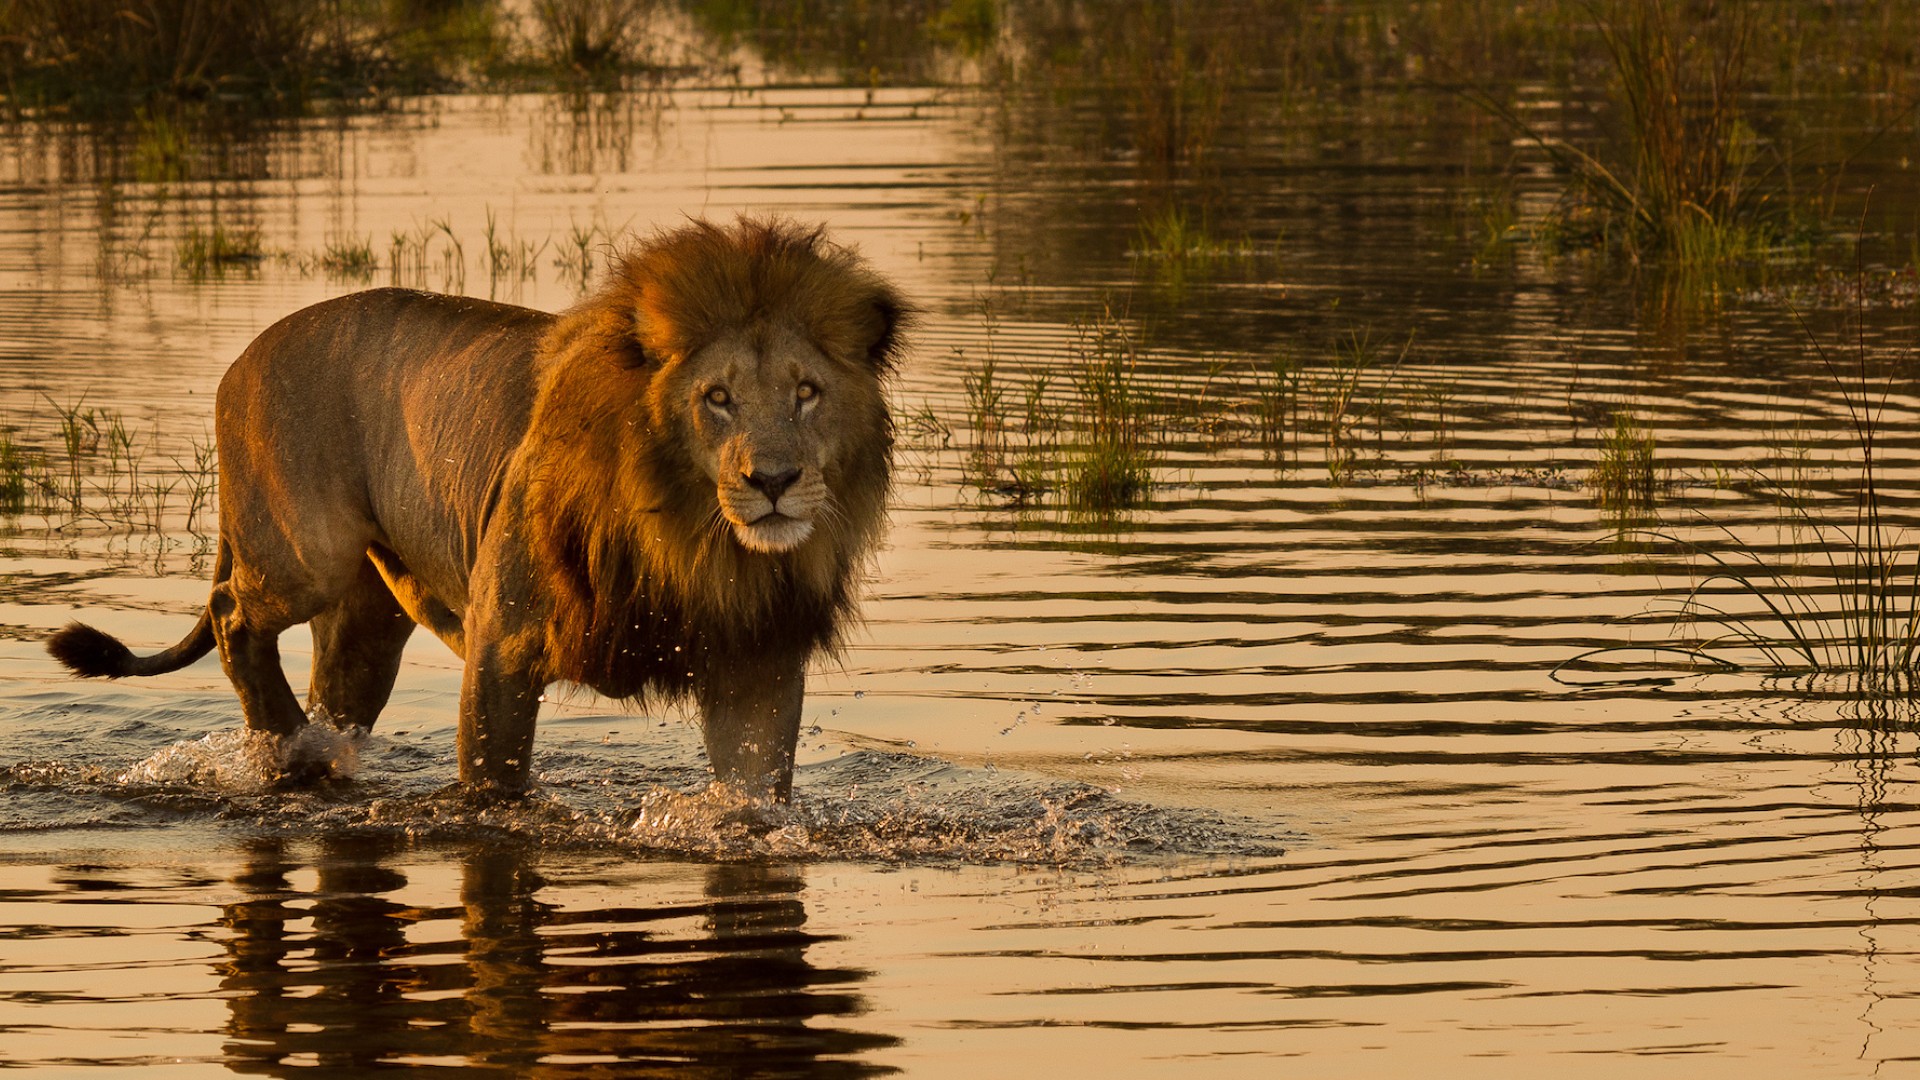 A single lion walking through a still pond at golden hour as seen on a Botswana safari